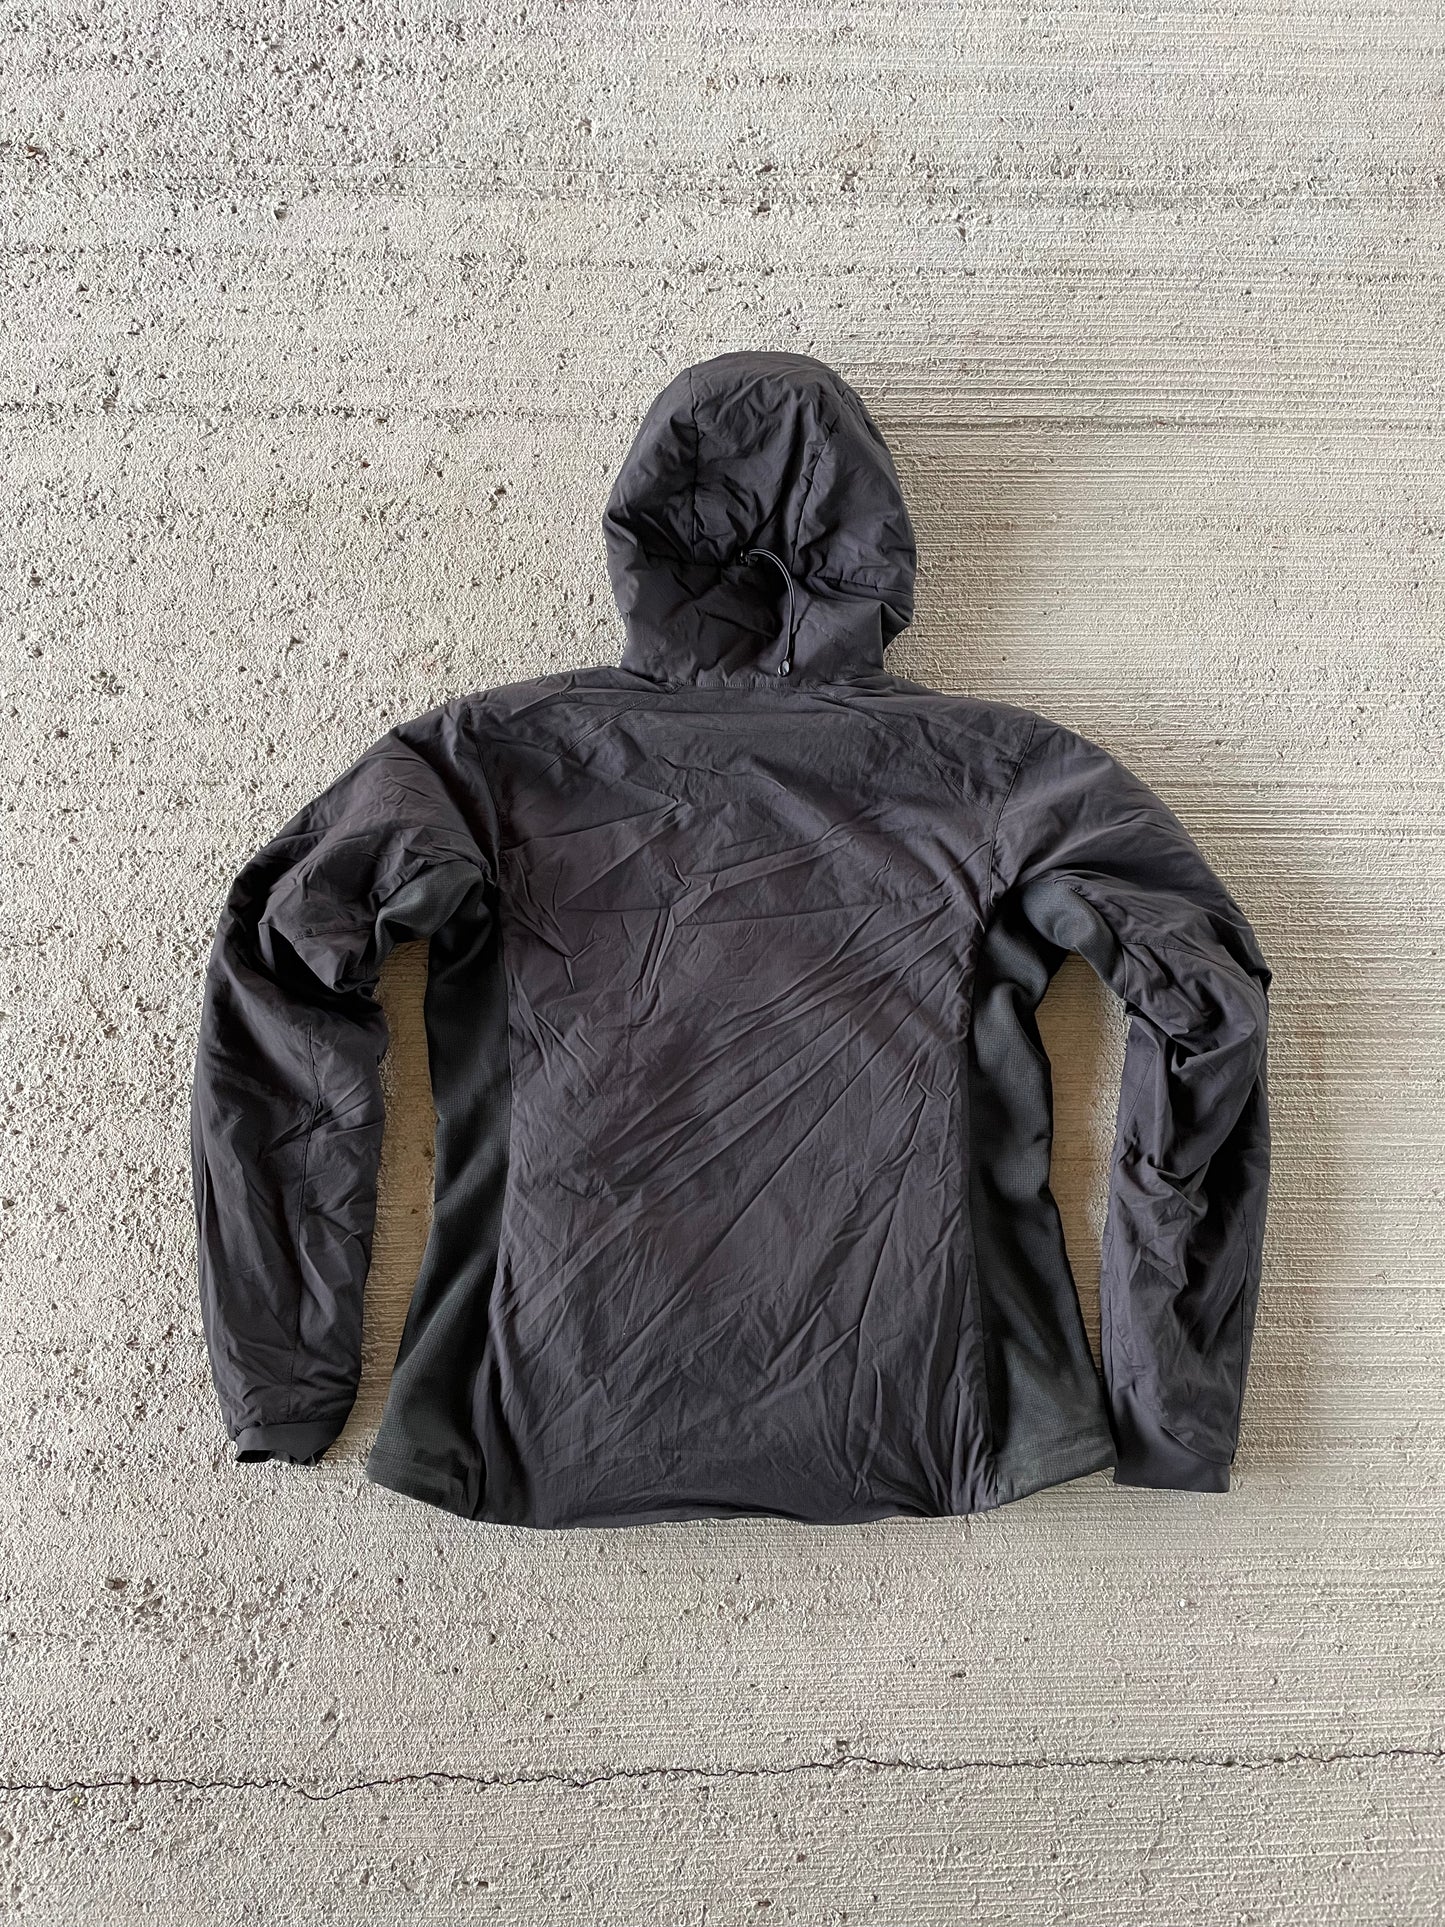 2017 Arc’teryx Atom LT Hooded Jacket